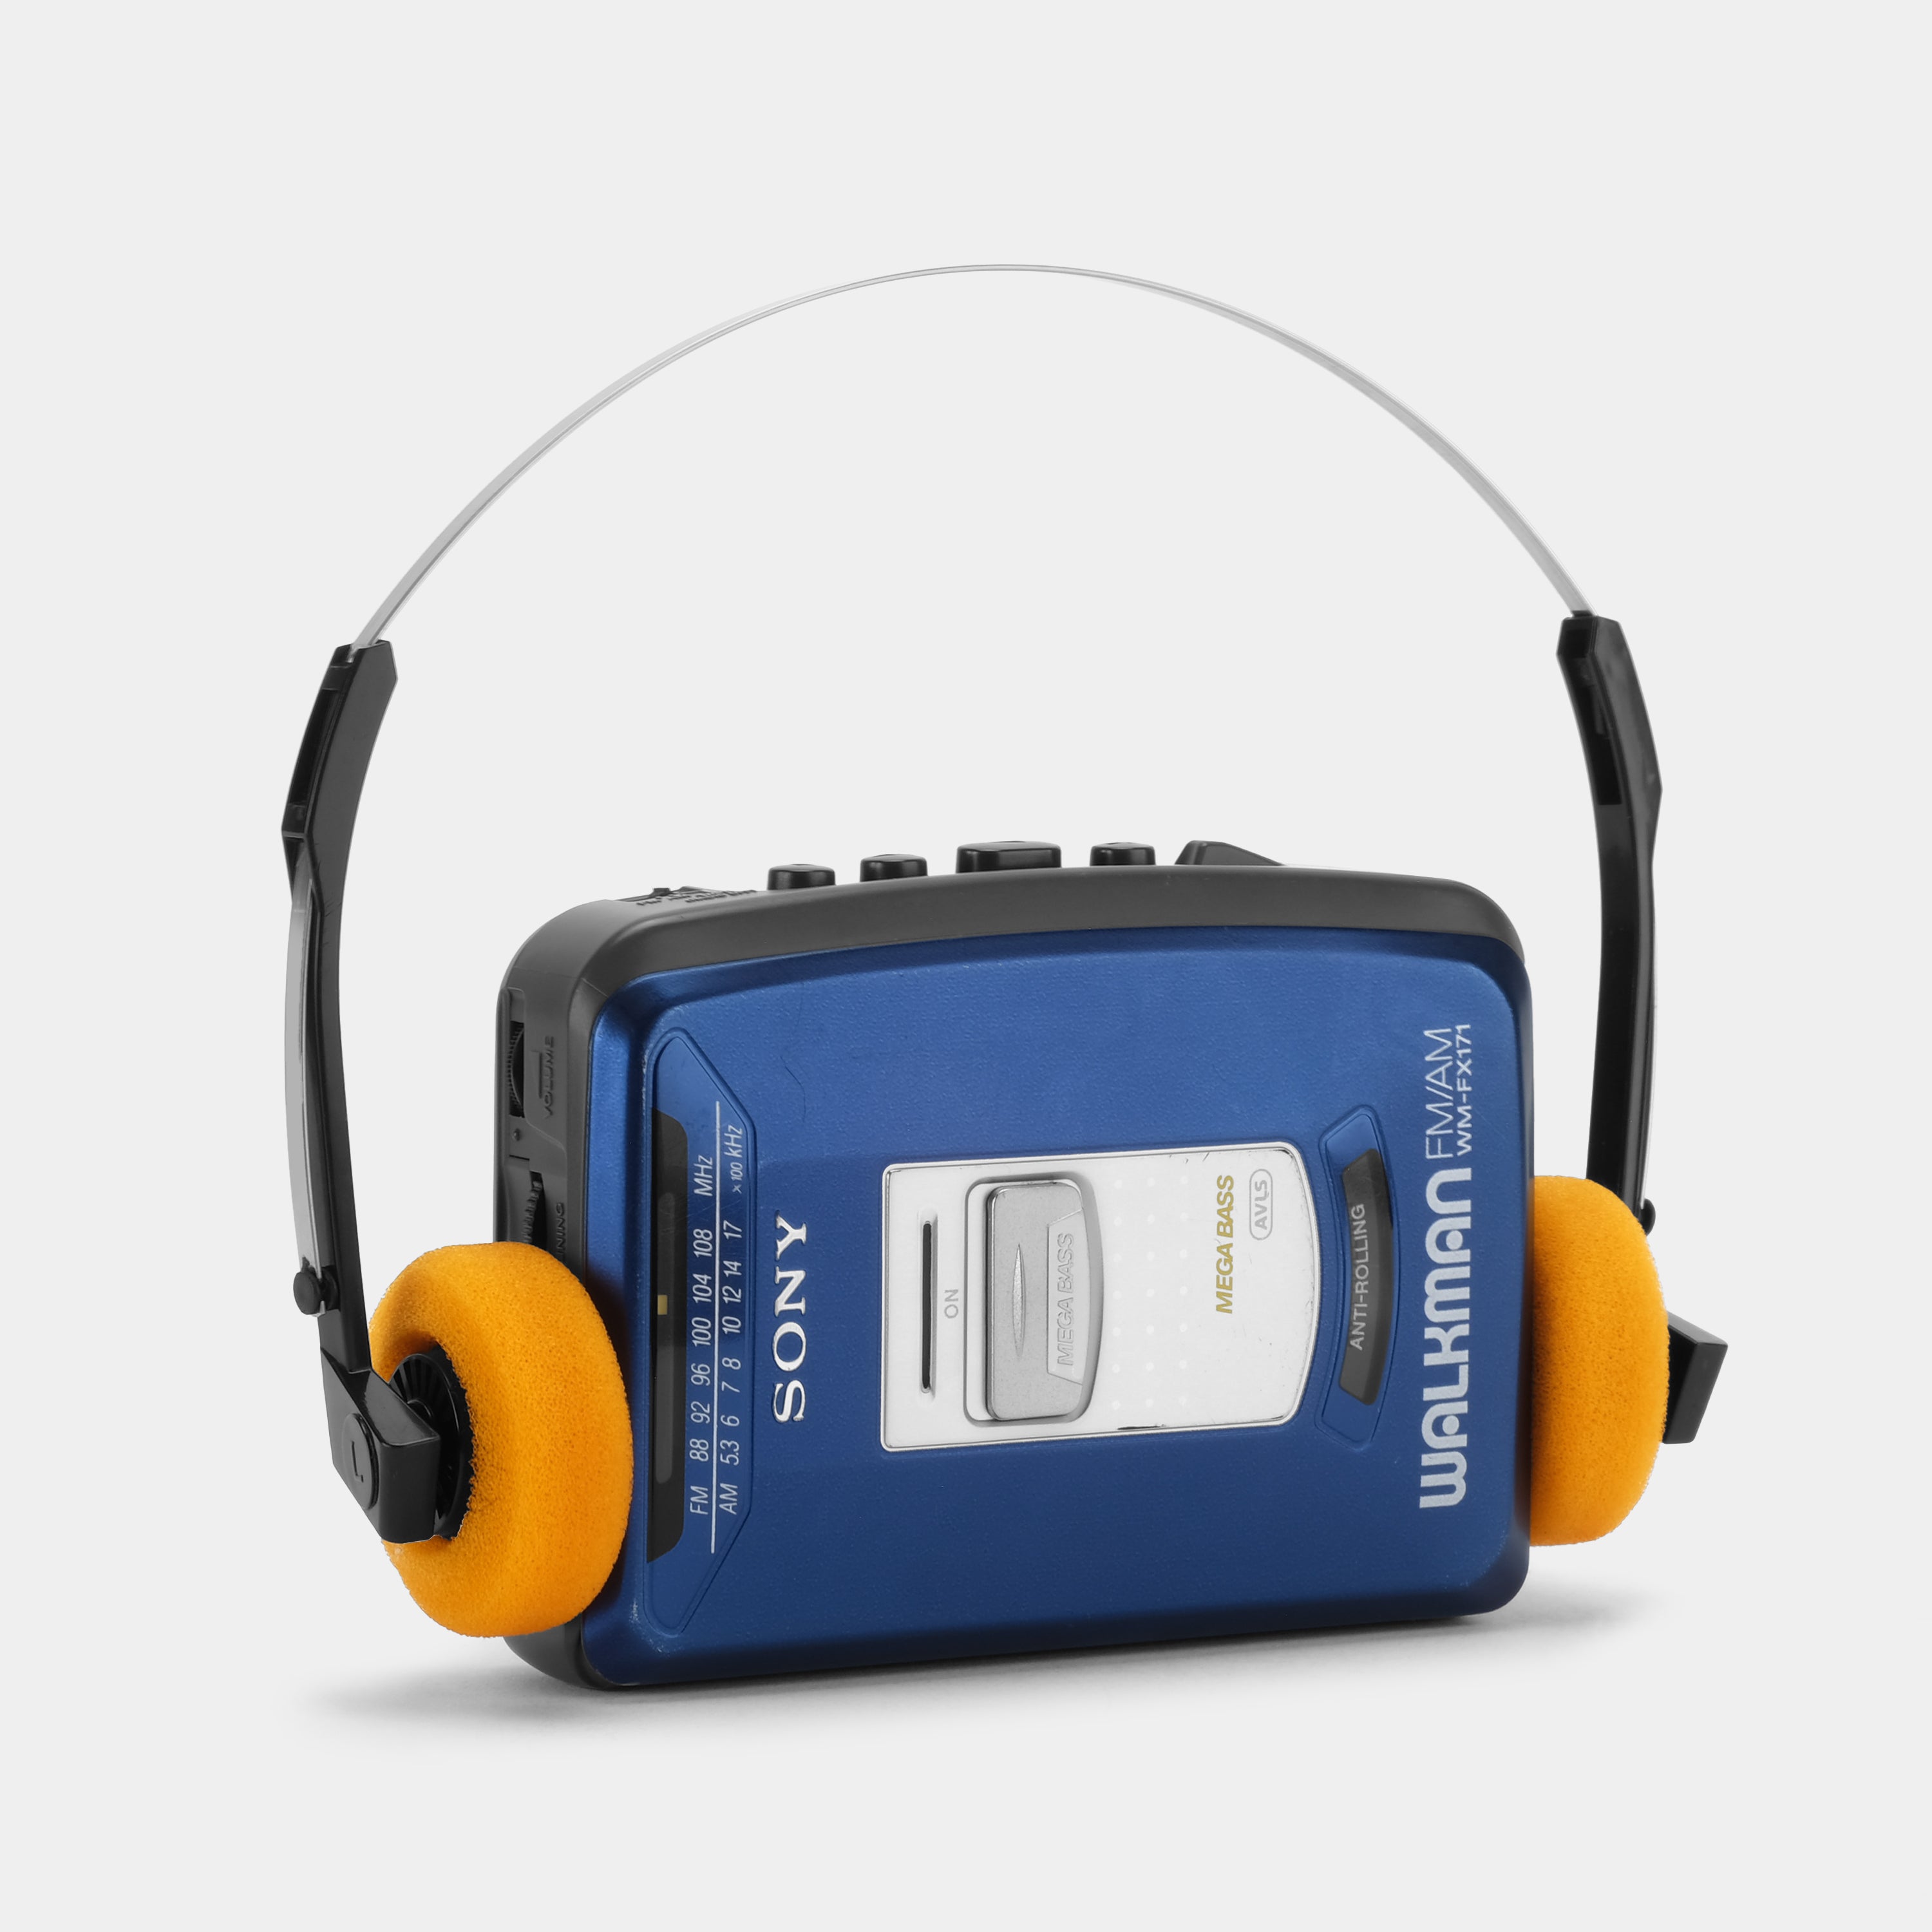 Sony Walkman WM-FX171 AM/FM Blue Portable Cassette Player